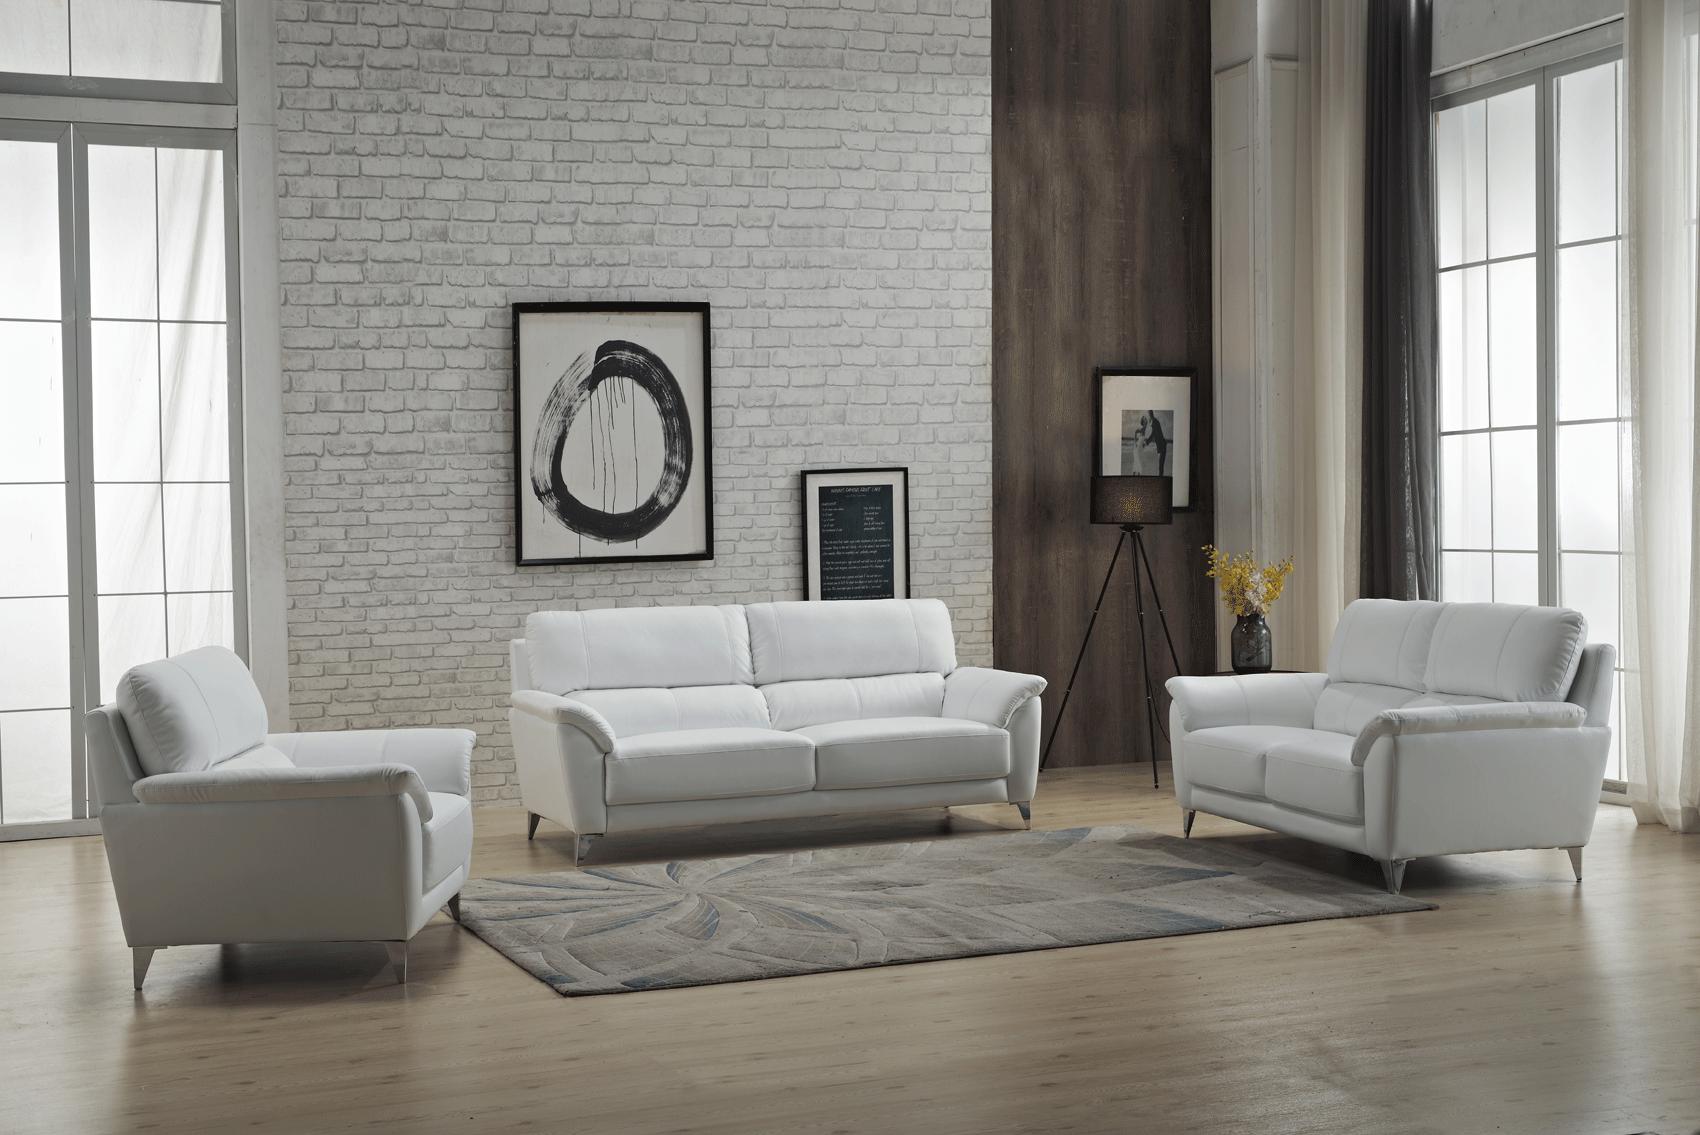 

    
White Top Grain Leather Living Room Sofa Set 3Pcs Contemporary ESF 406
